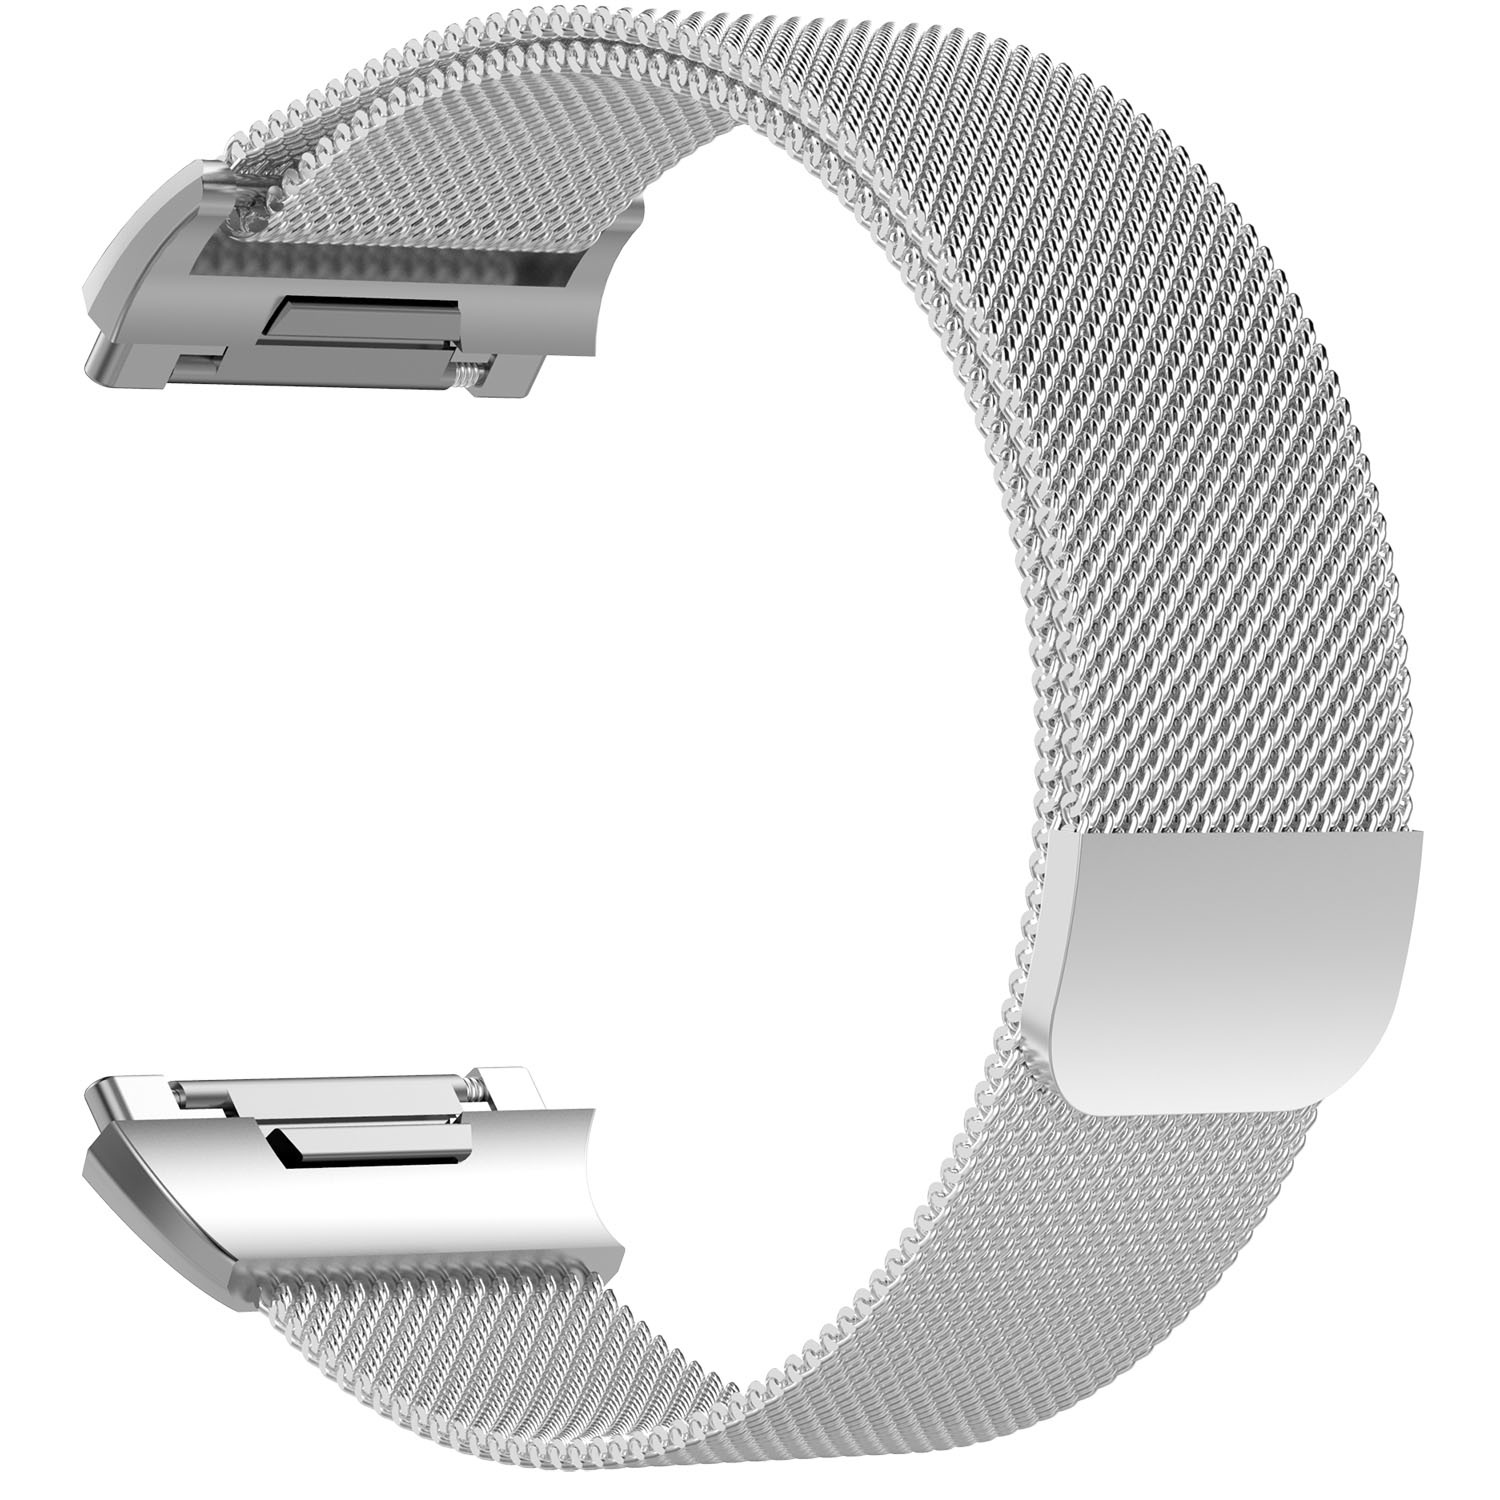 Cinturino loop in maglia milanese per Fitbit Ionic - argento